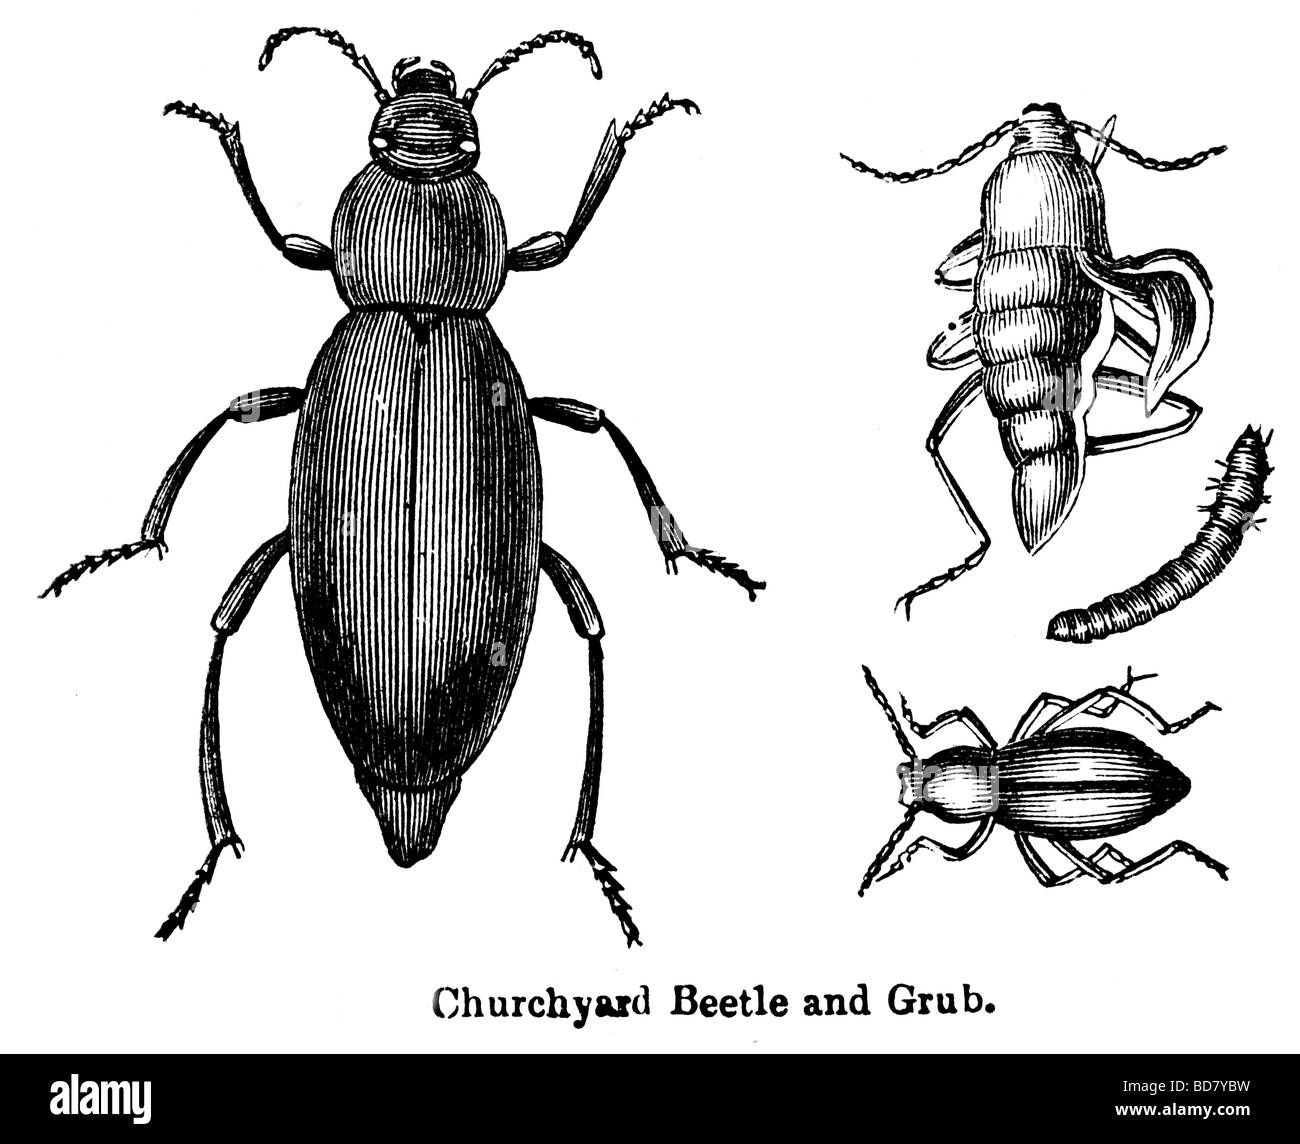 churchyard beetle and grub Stock Photo